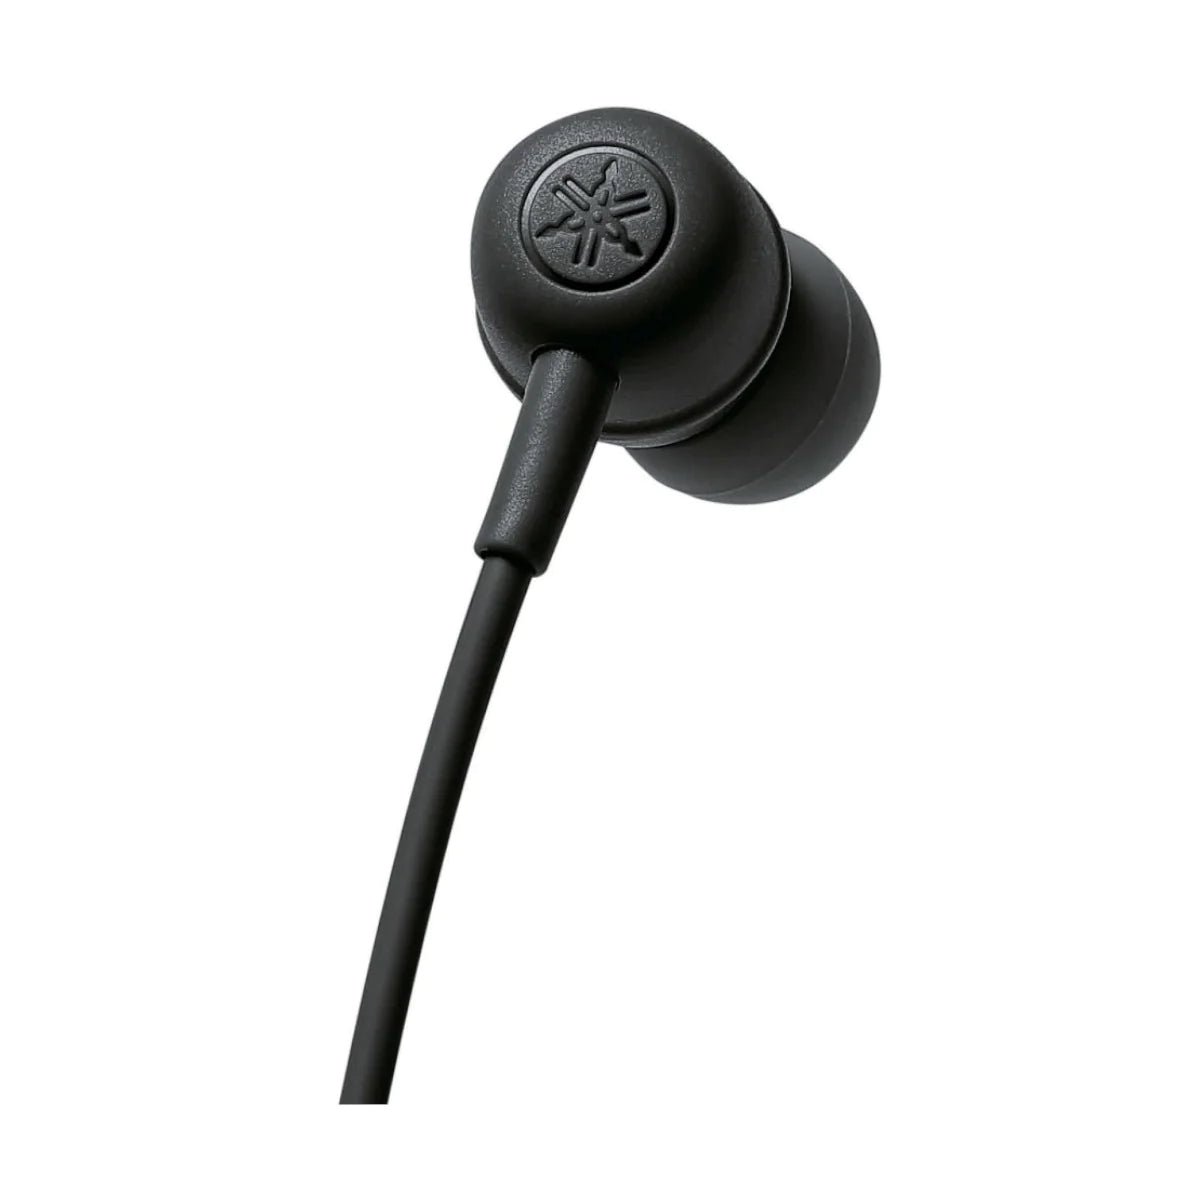 Yamaha EP-E30ABL Bluetooth Wireless Neckband Earphones